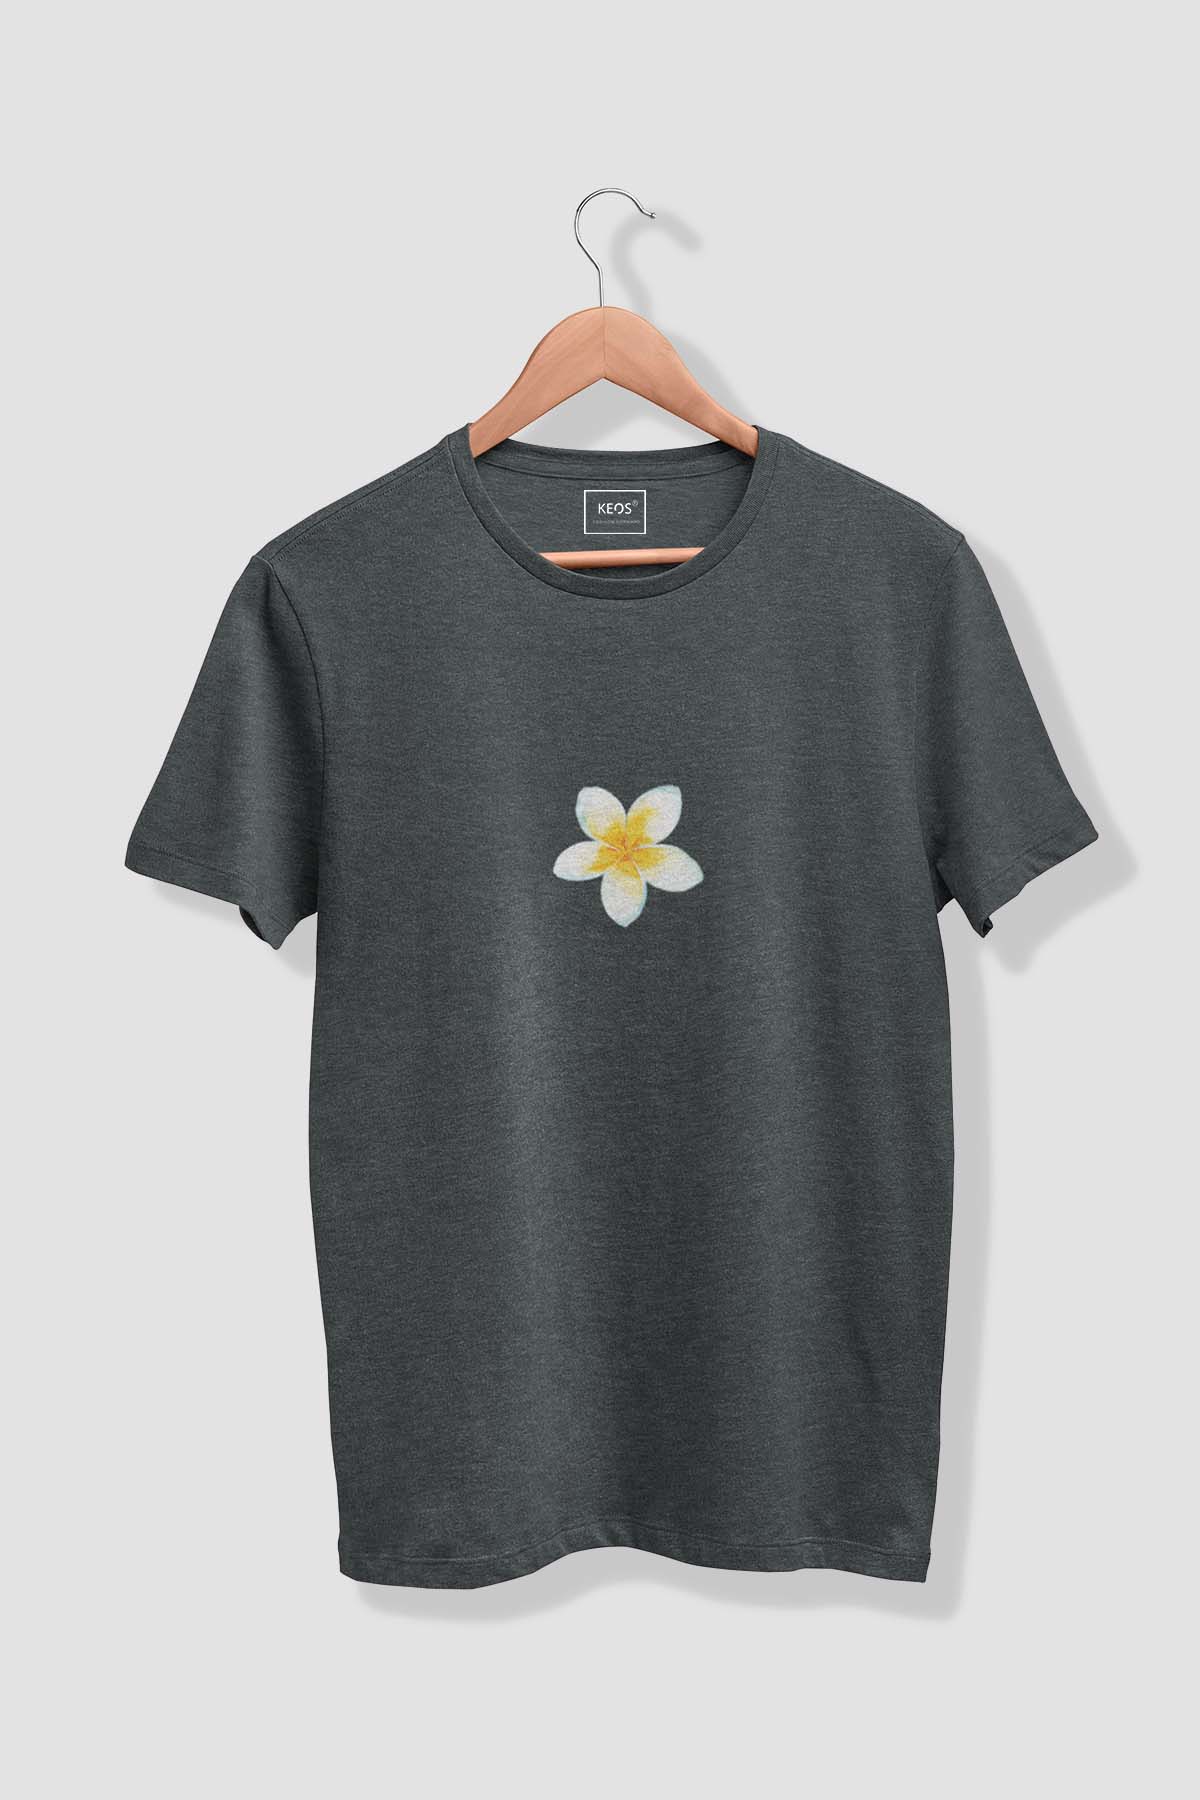 Plumeria Summer Organic Cotton T-shirt - keos.life